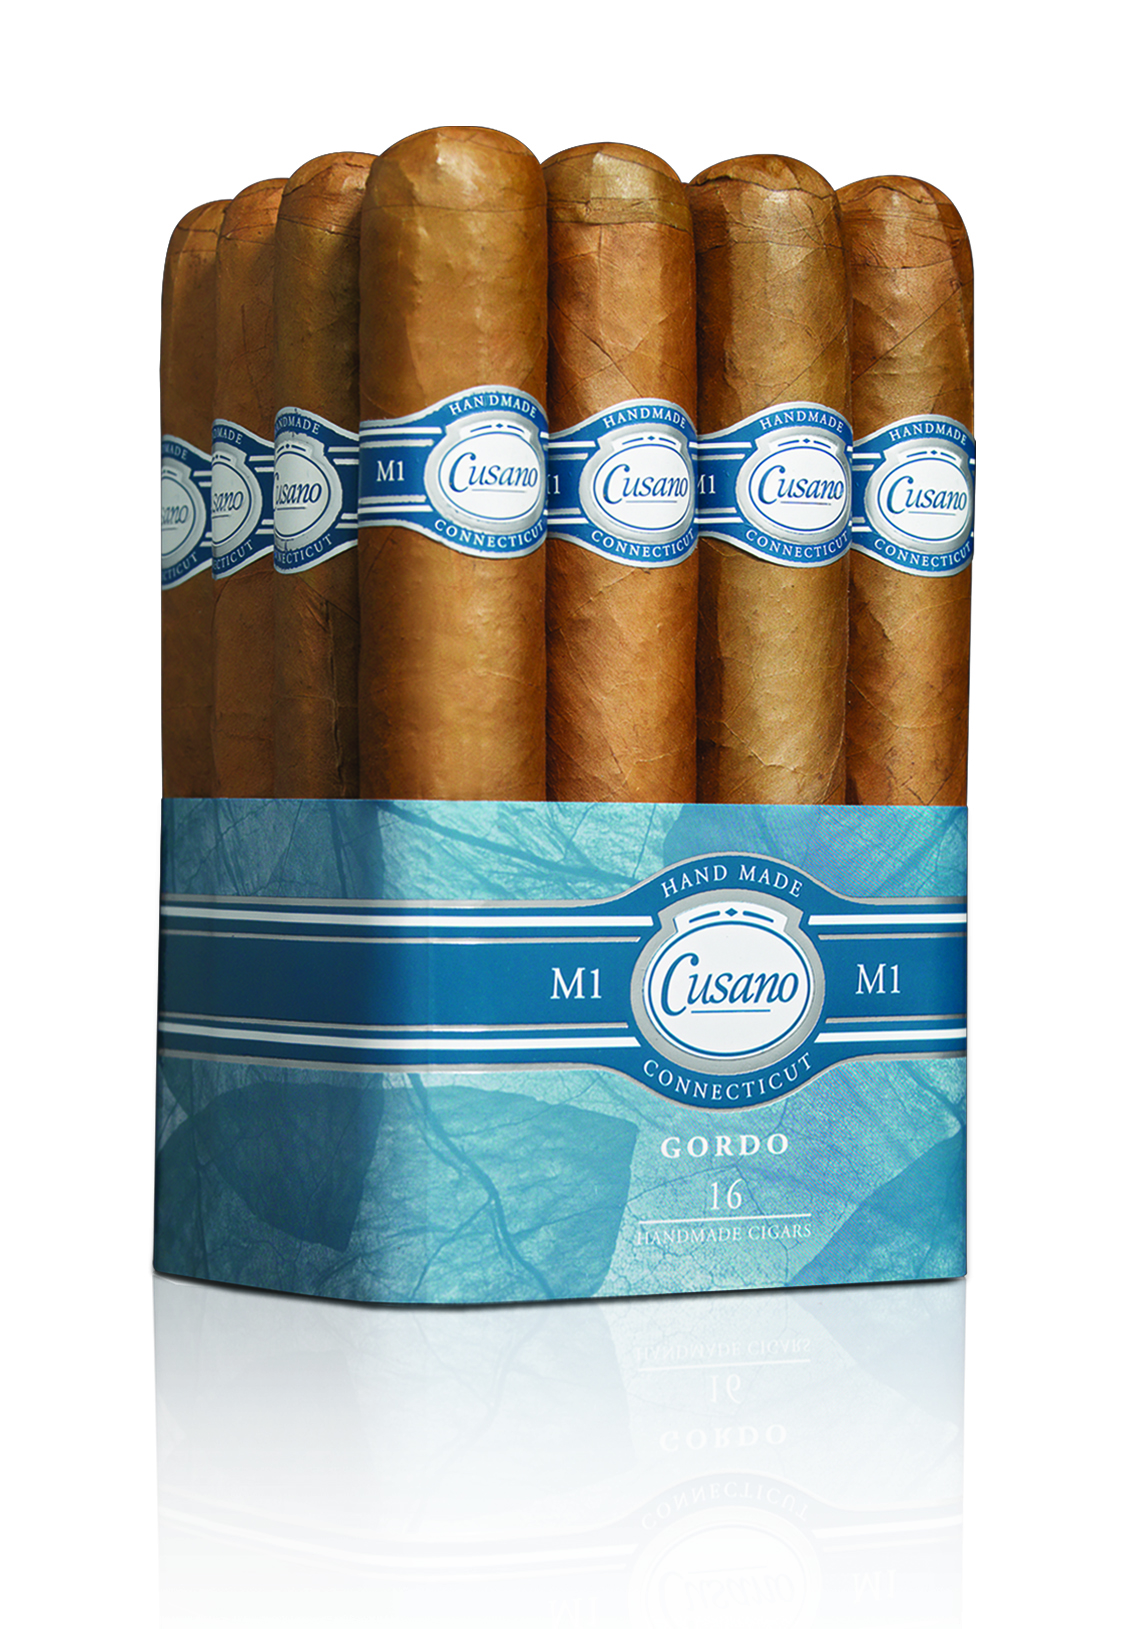 Cusano M1 Connecticut cigar bundle